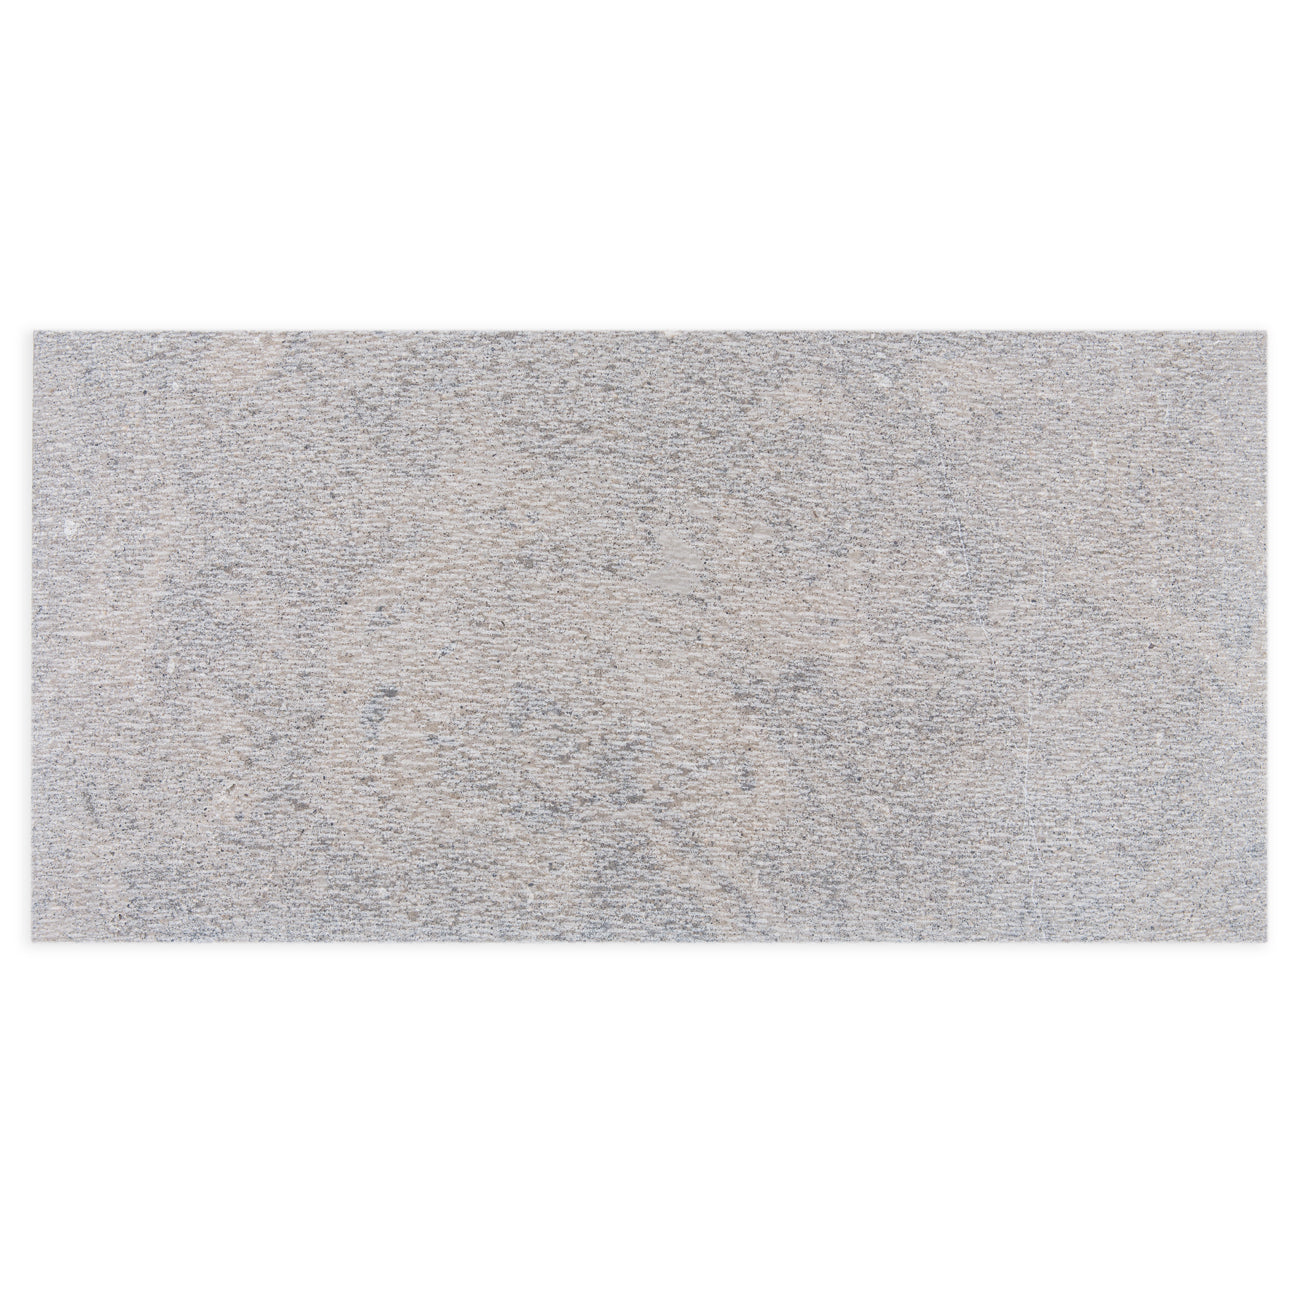 haussmann saint louis limestone rectangle natural stone field tile 12x24 linen